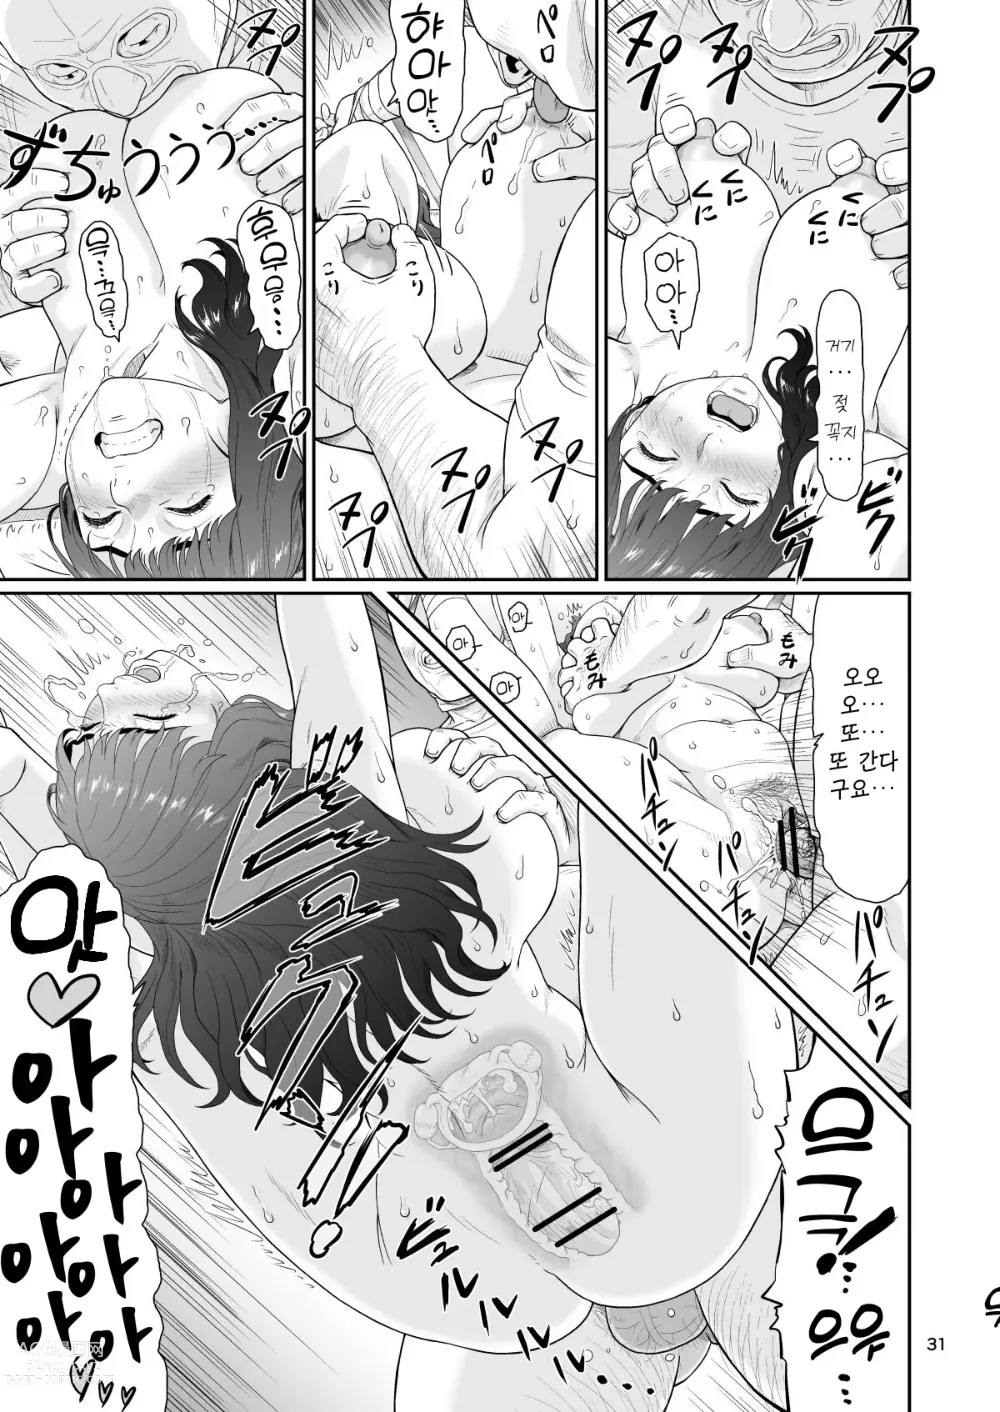 Page 31 of doujinshi 야한 짓 이외에 시간을 멈춰선 안된다구요 2